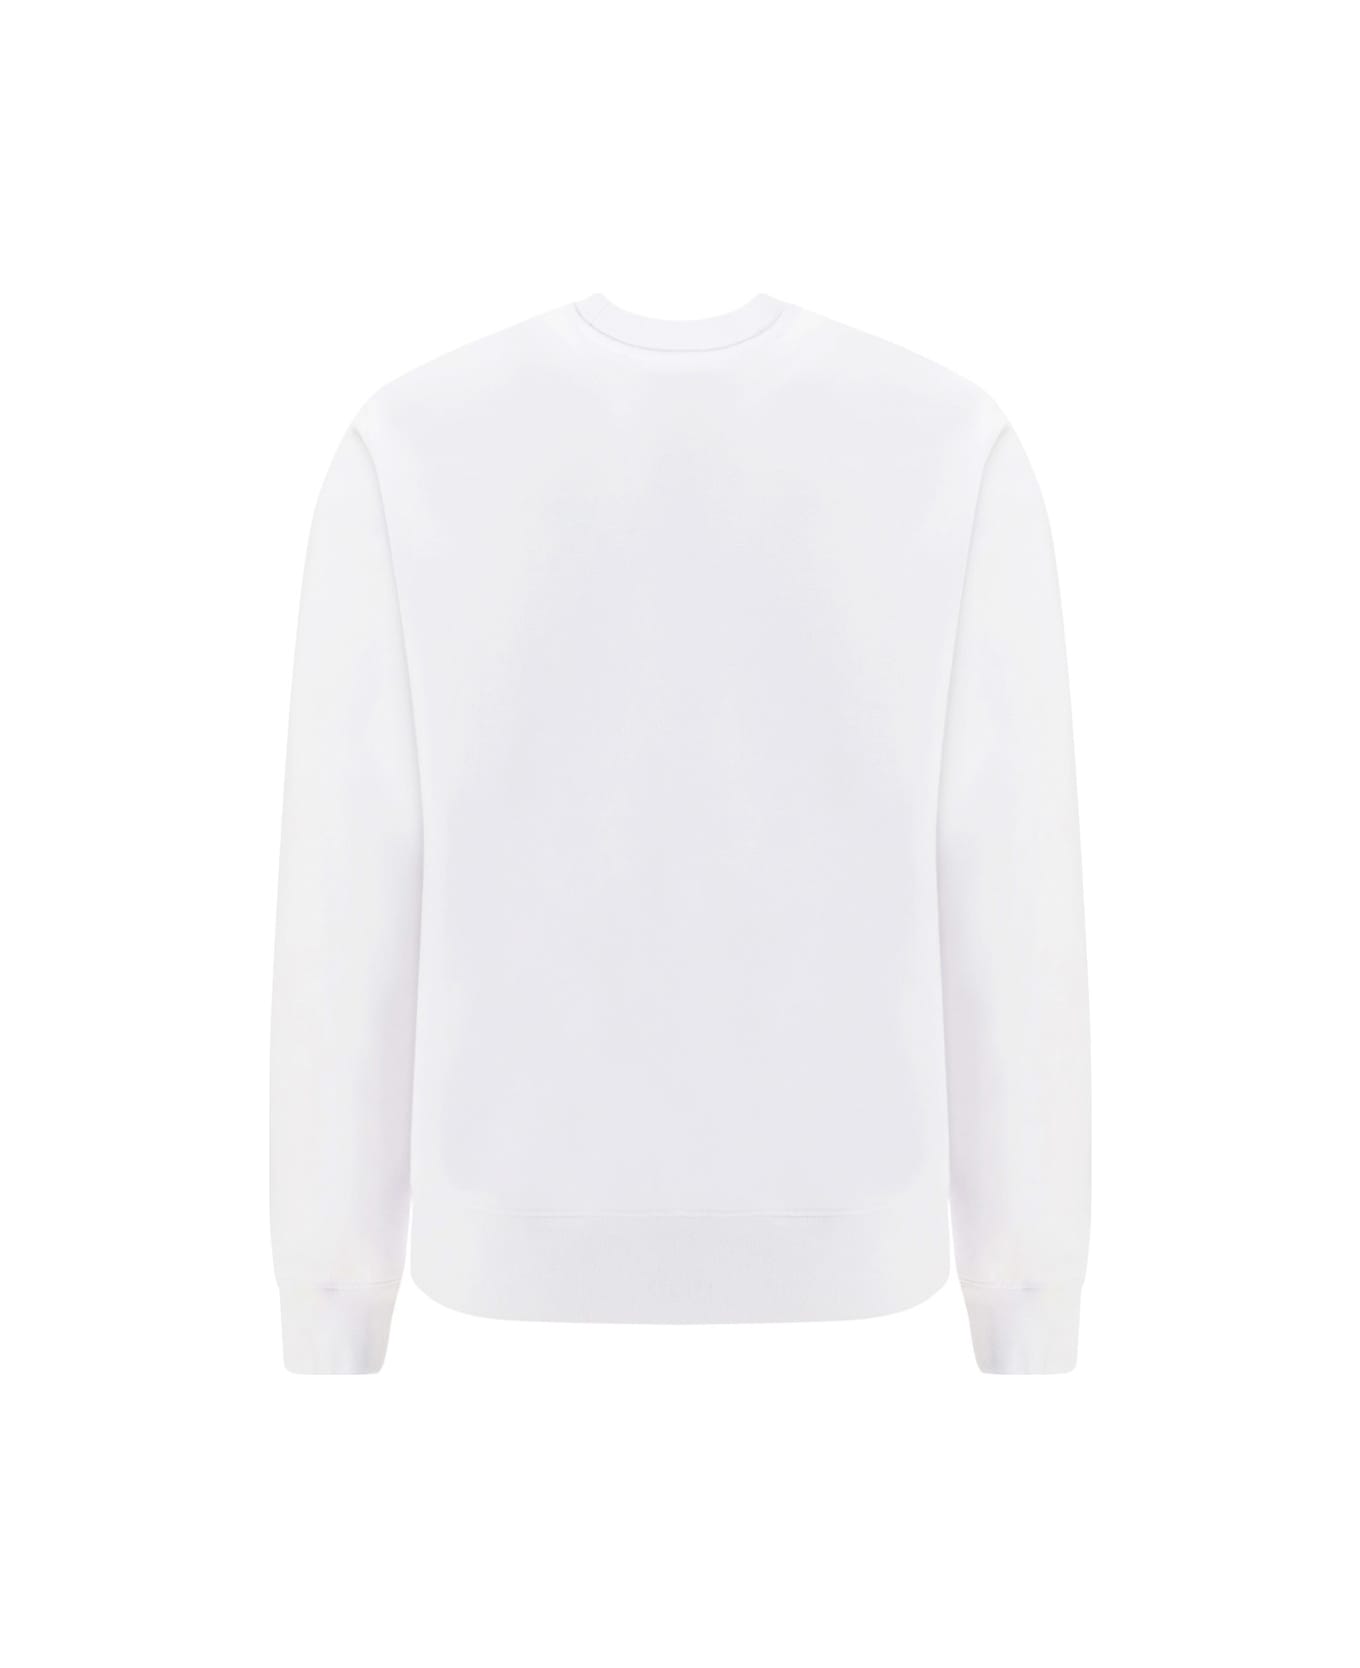 Off-White Sweatshirt - White/black